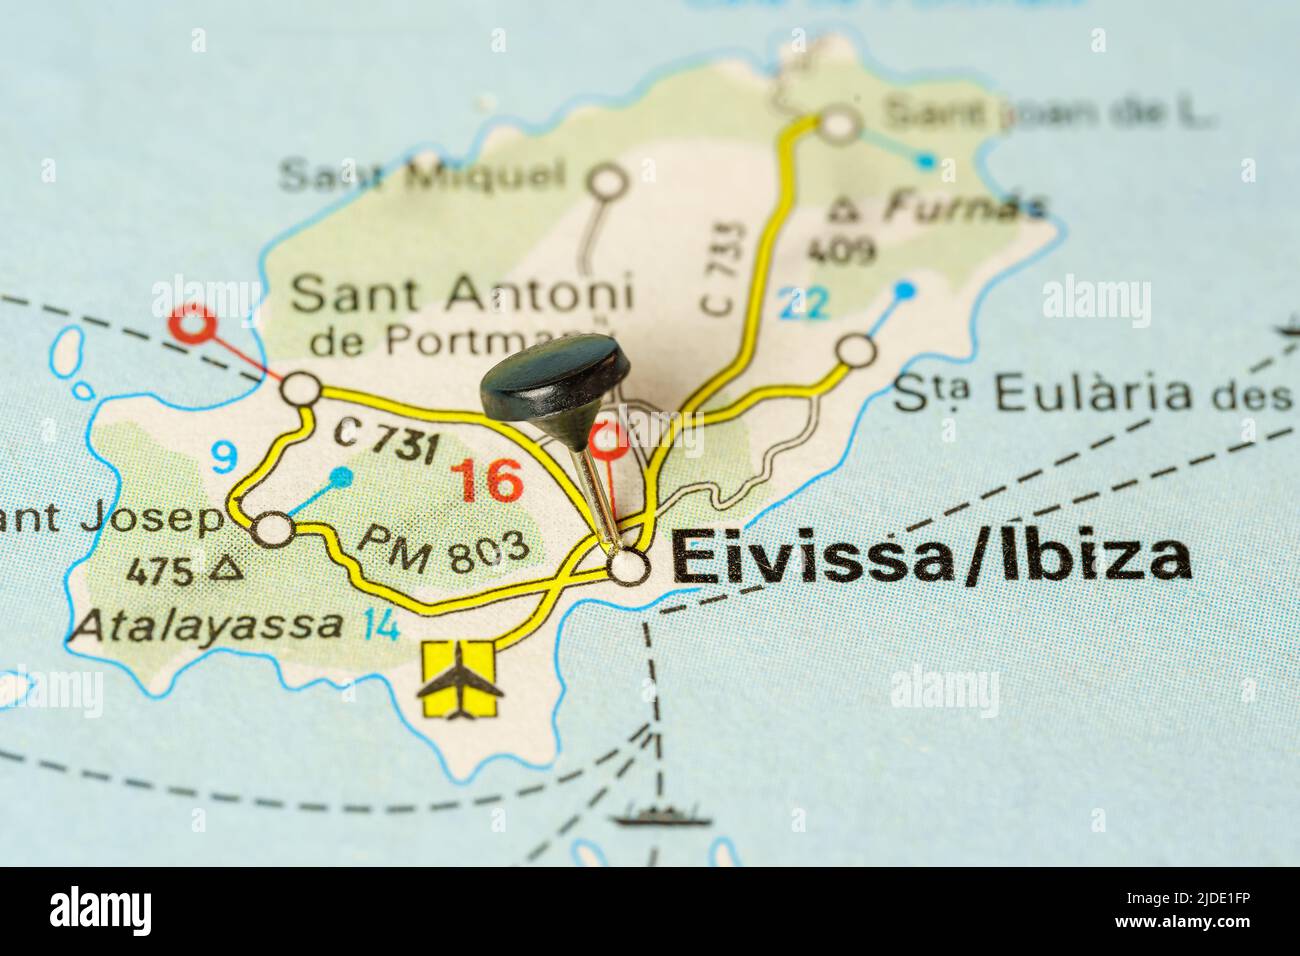 Tourist Destination Of Ibiza With A Pin On A Map Macro Photo 2JDE1FP 